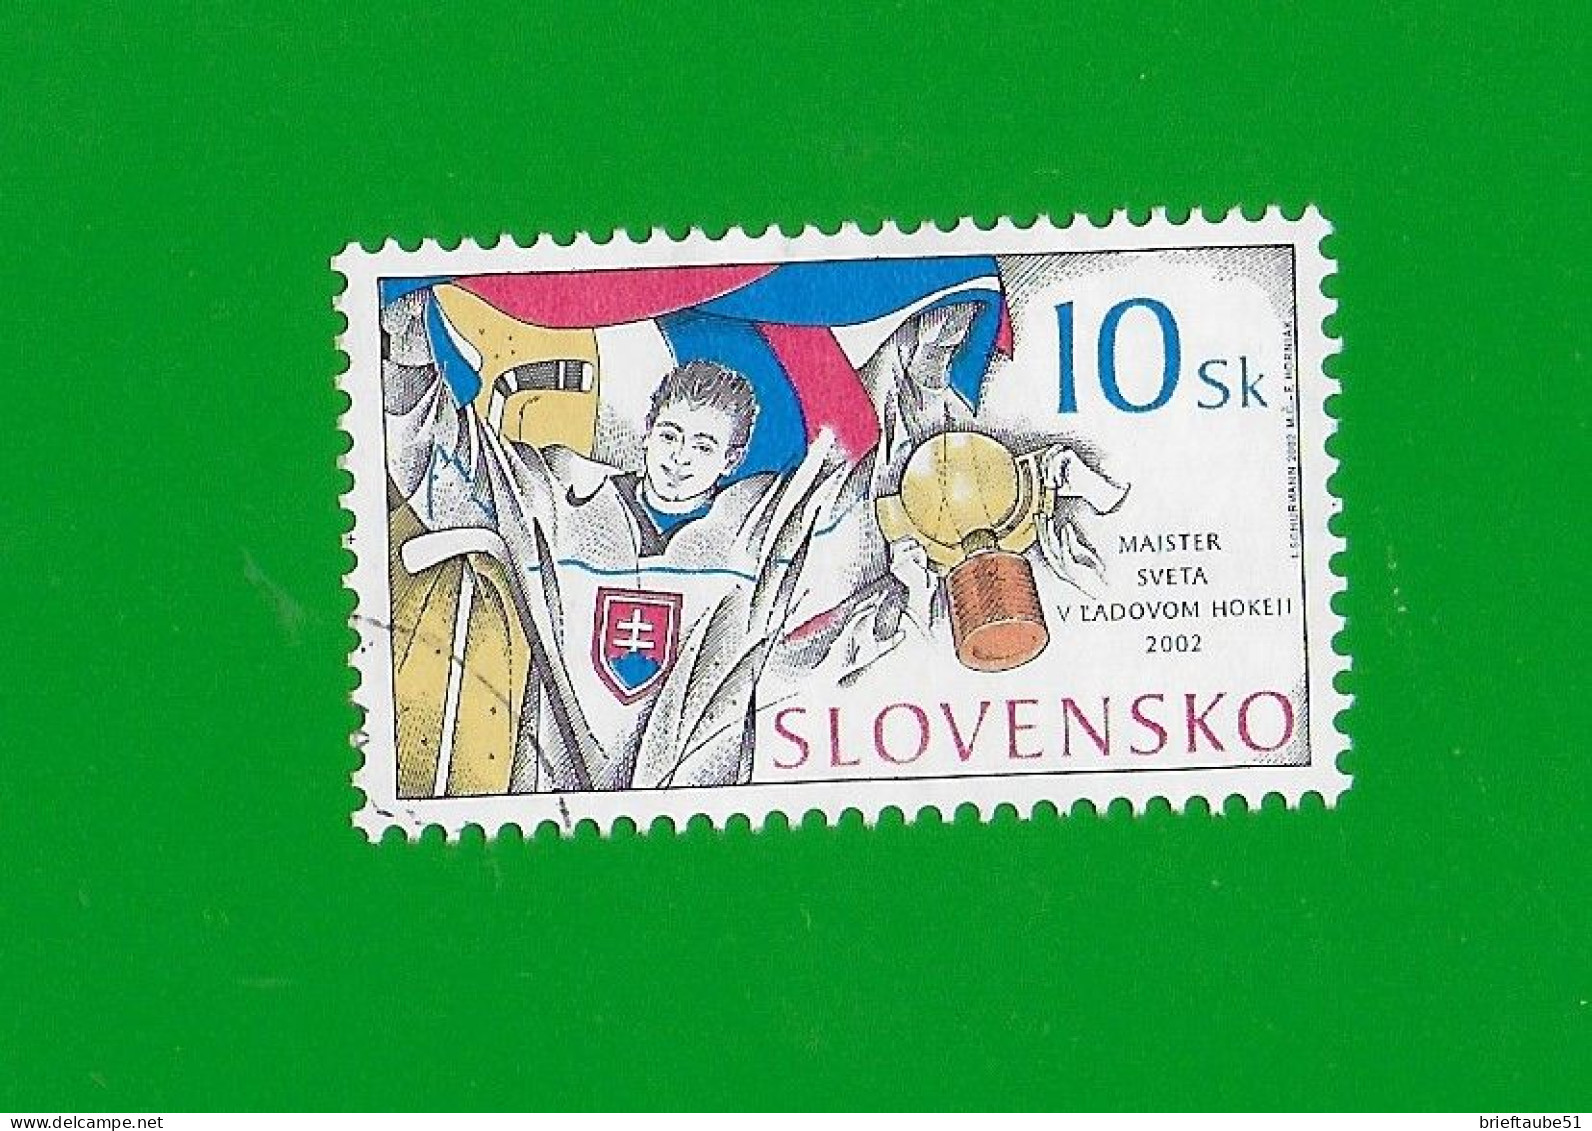 SLOVAKIA REPUBLIC 2002 Gestempelt°Used/Bedarf  MiNr. 432  #  "Eishockey - WM In Schweden # Goldmedaille" - Usati